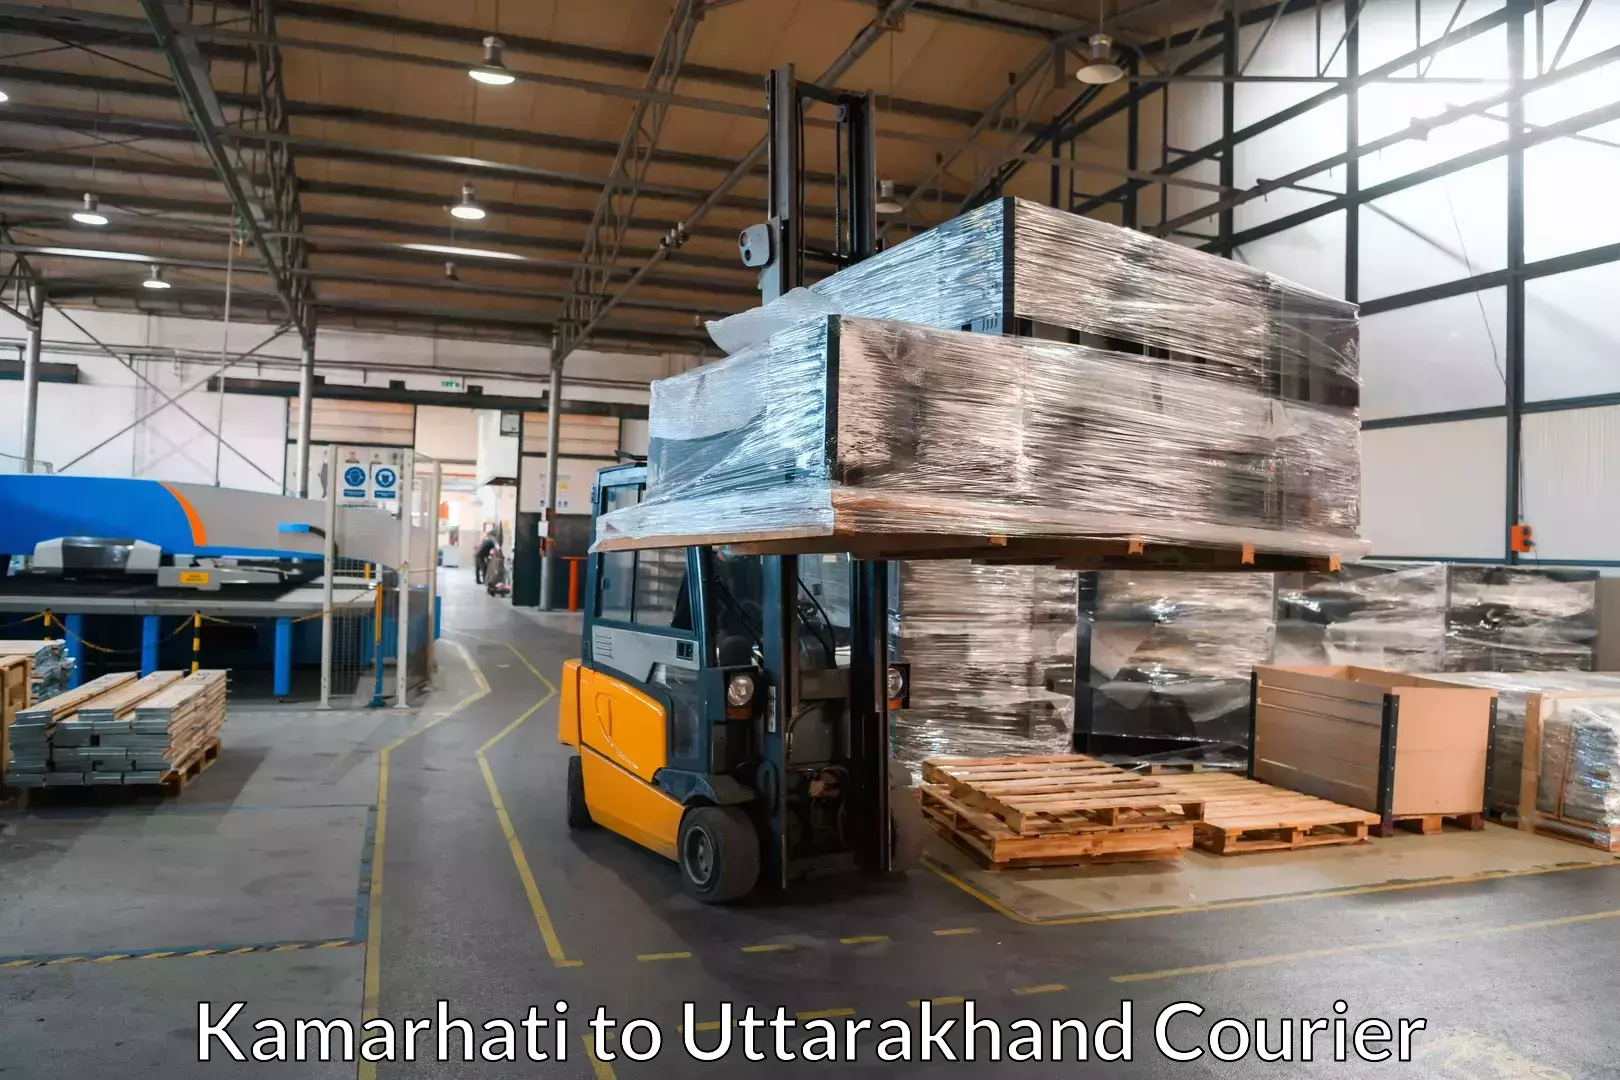 Professional moving company Kamarhati to Kashipur